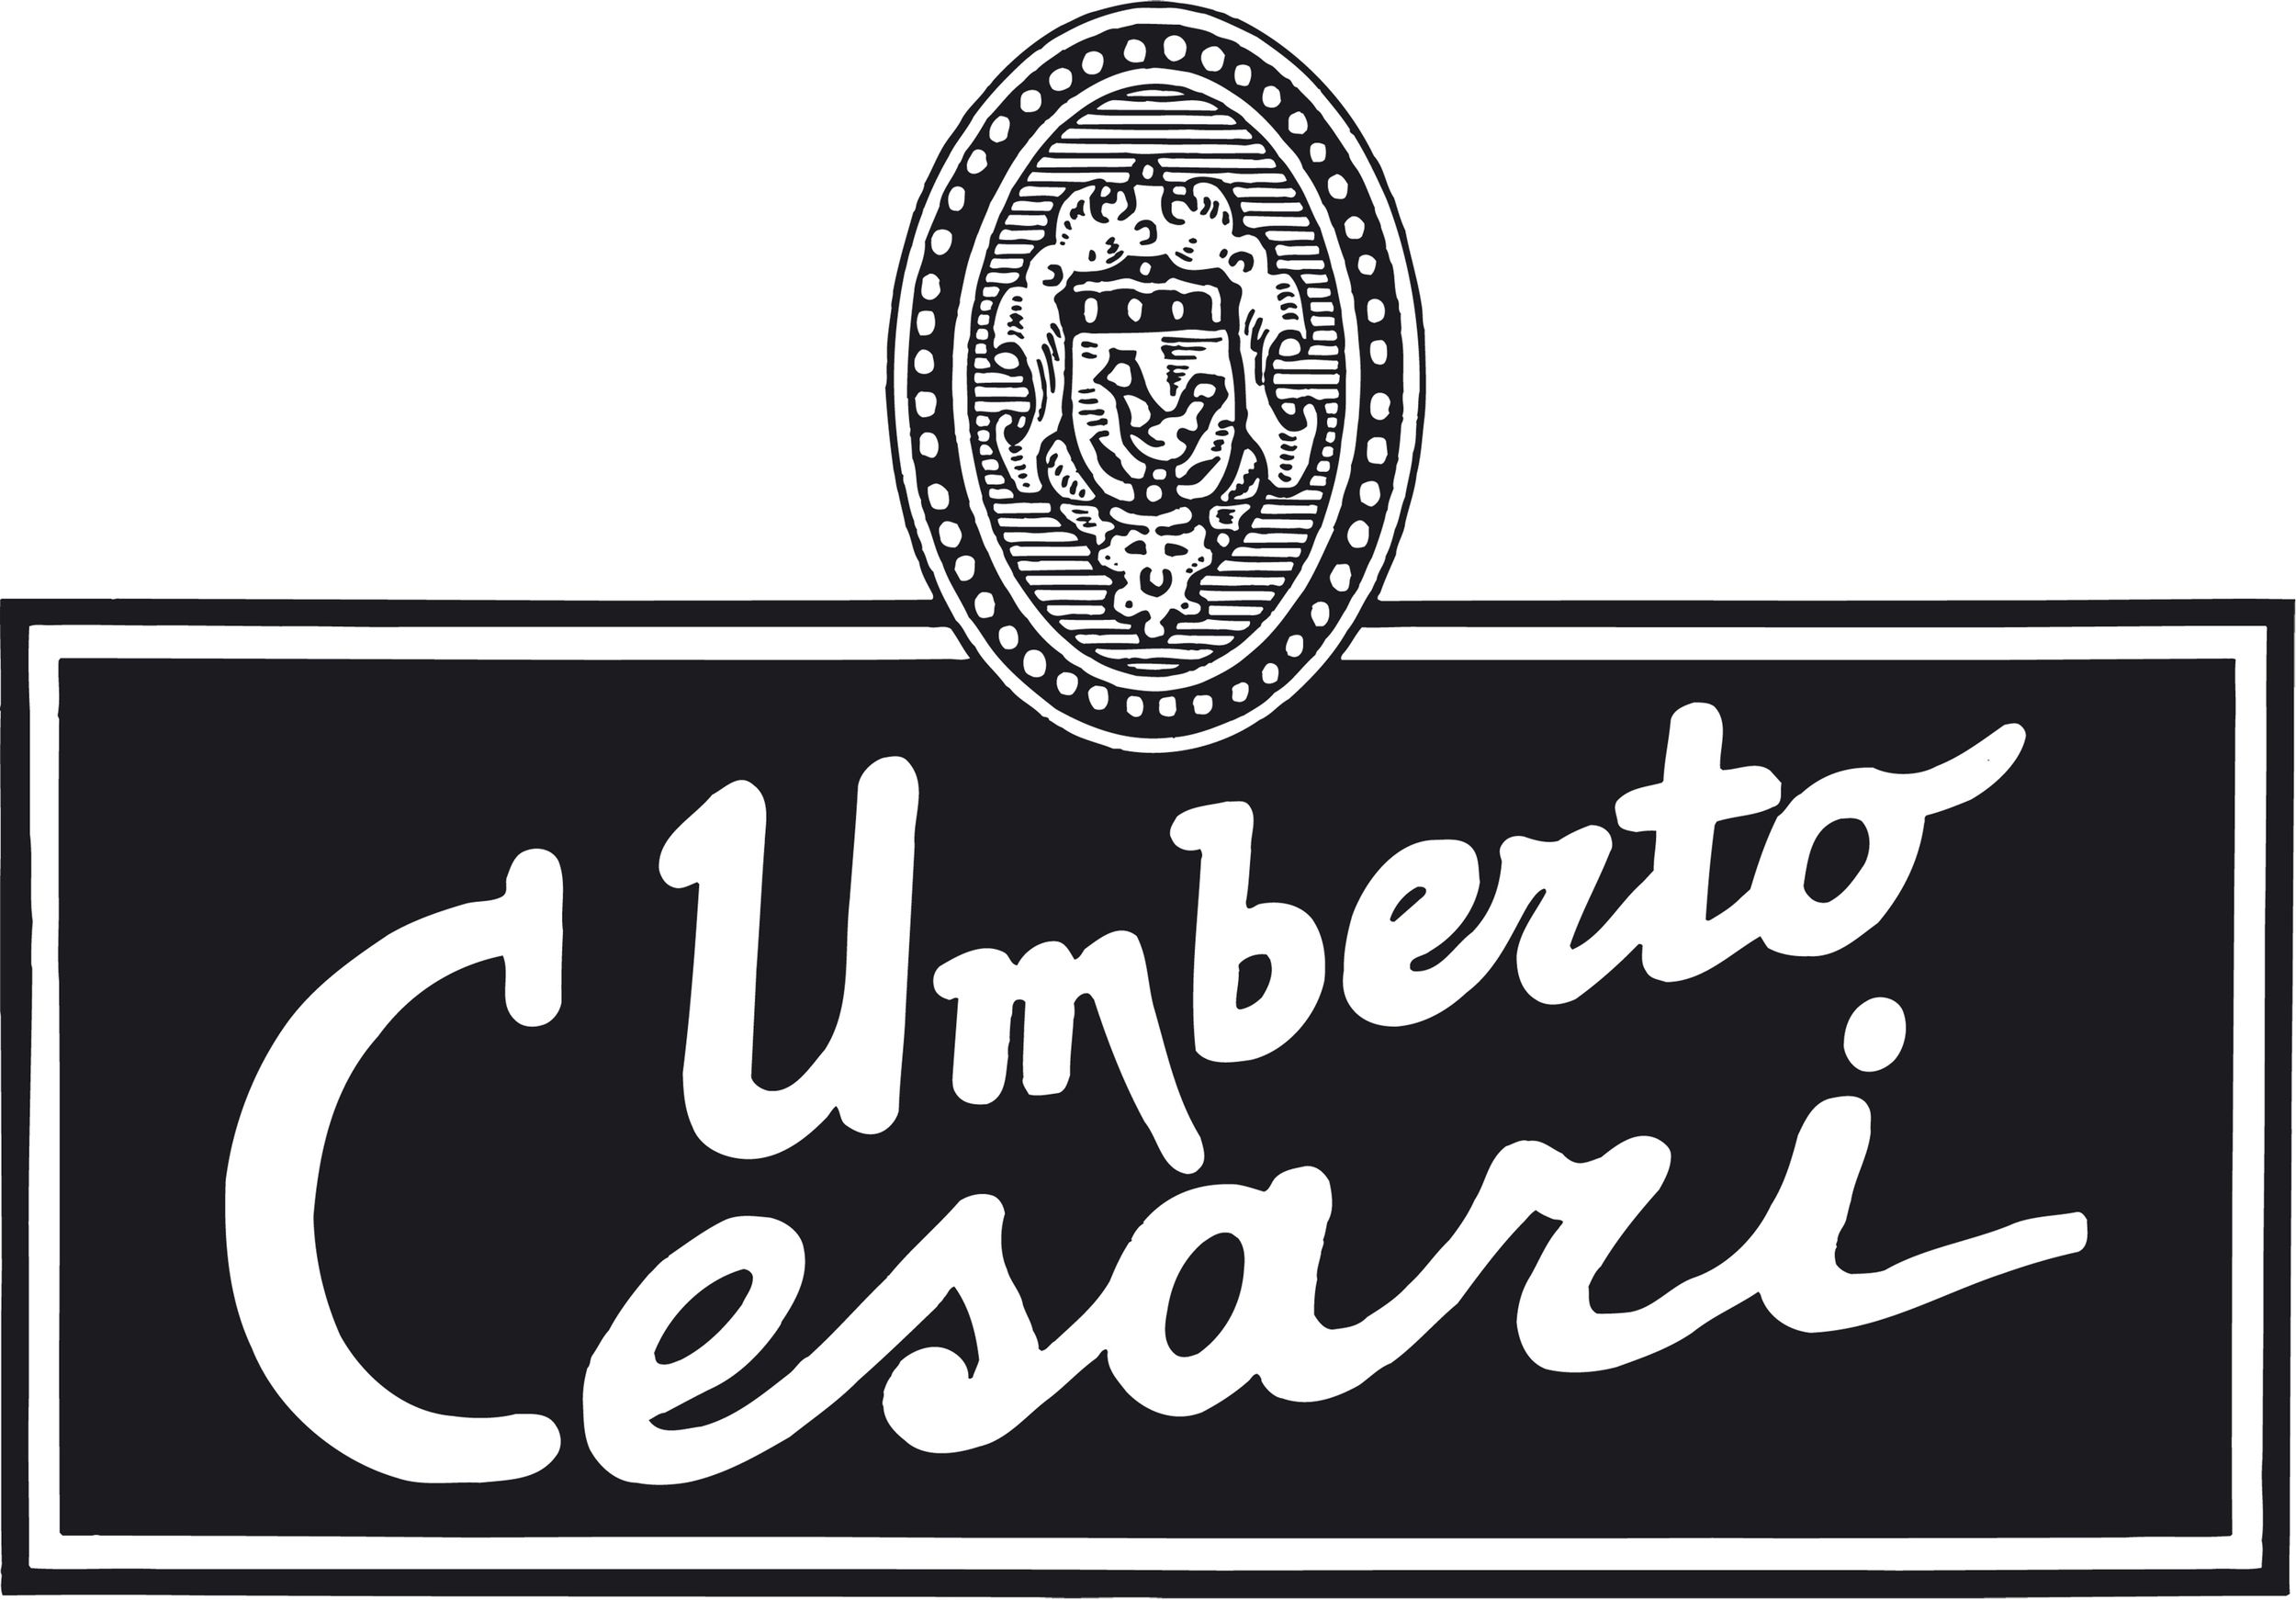 義大利Umberto Cesari酒莊